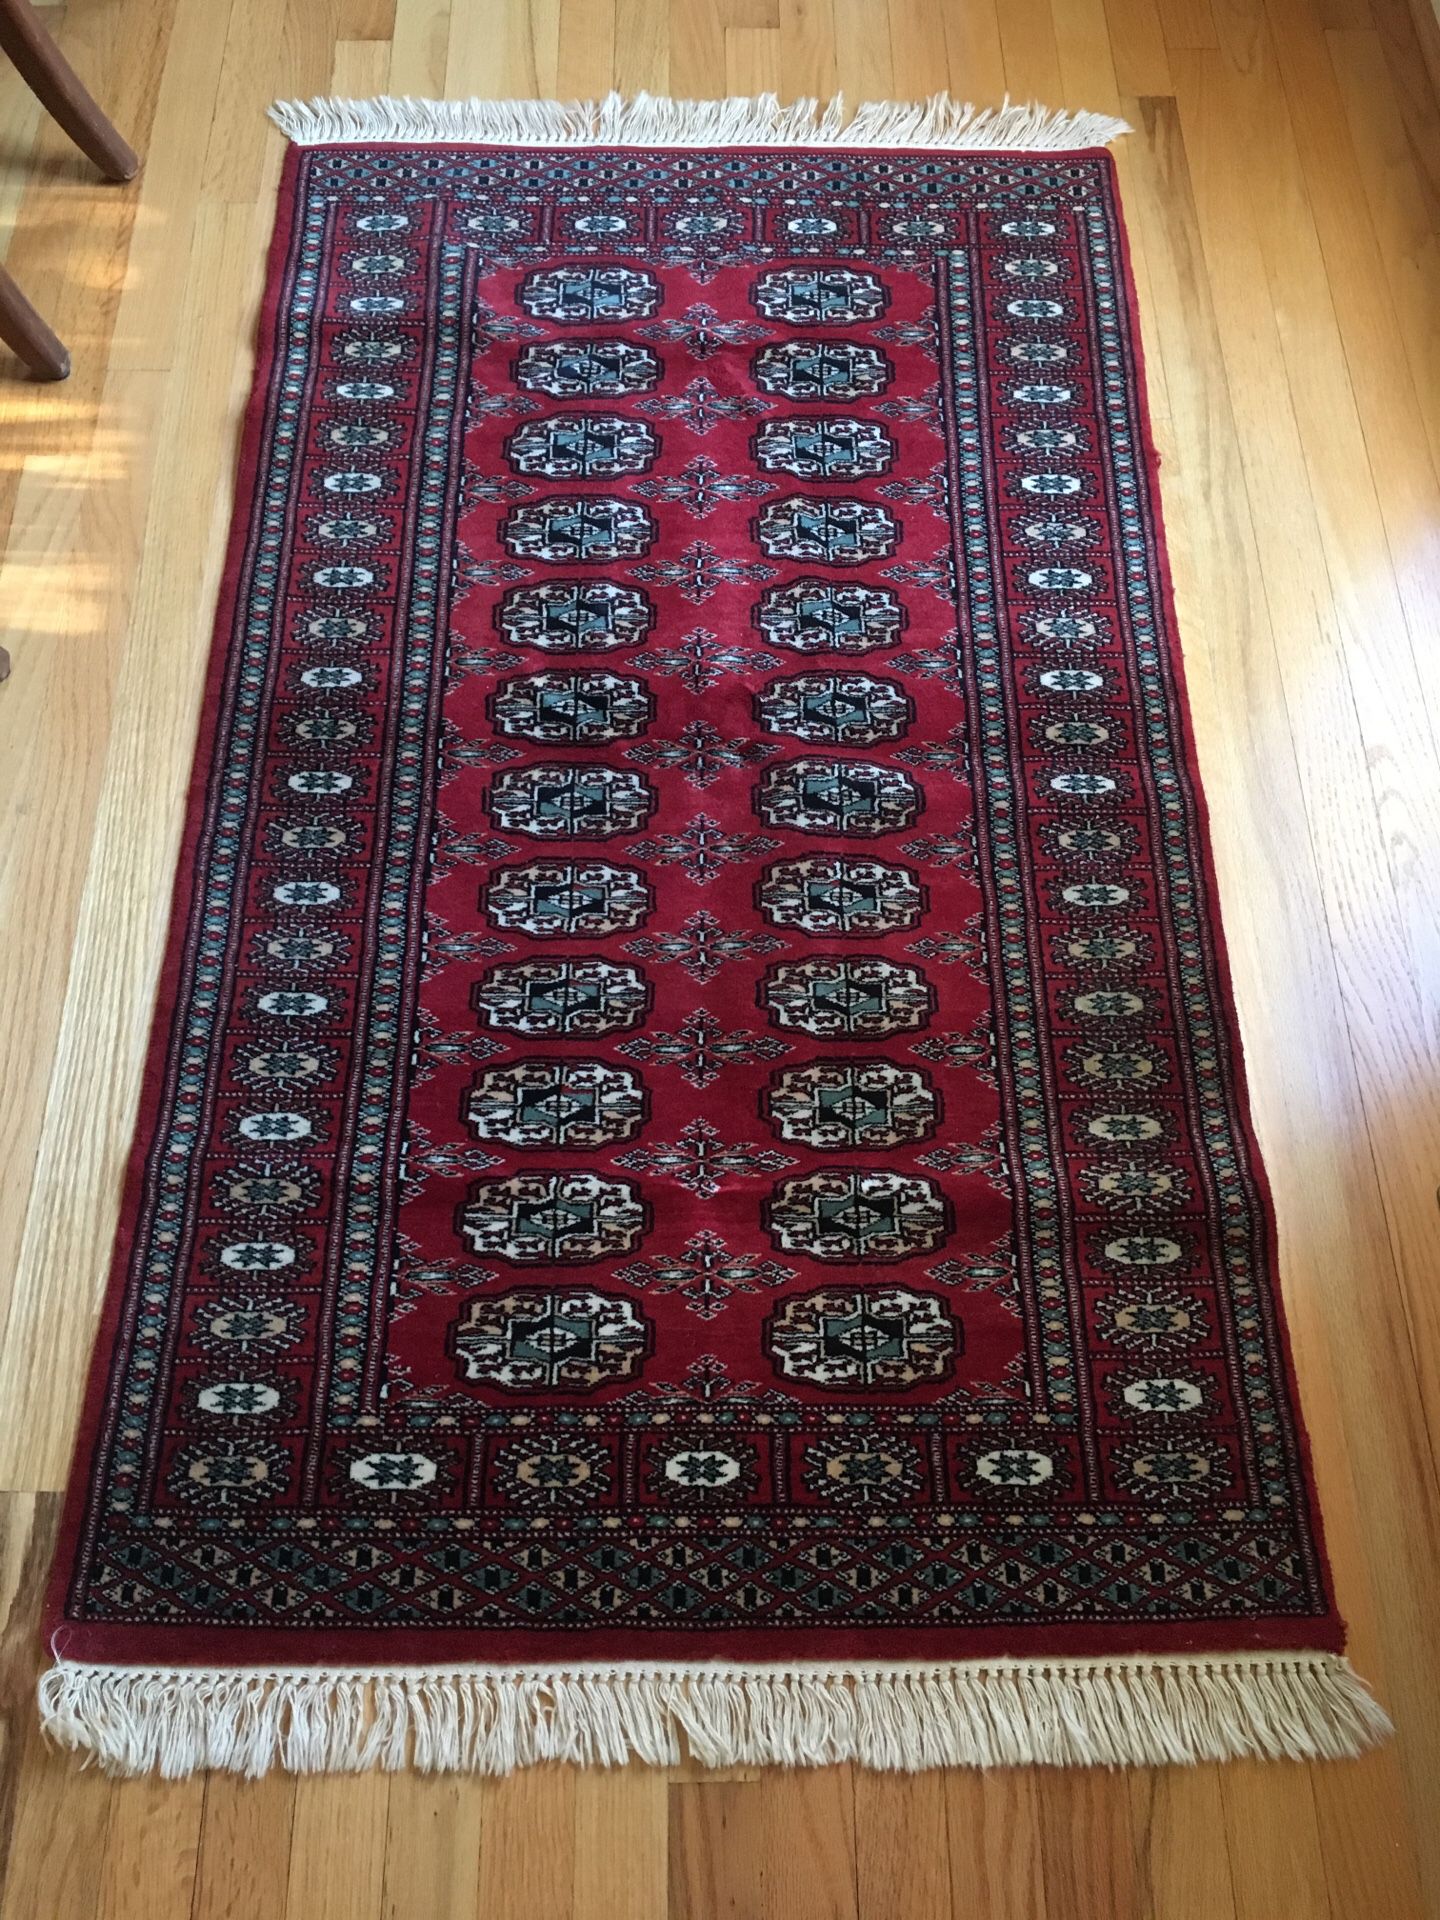 Beautiful Oriental Rug (32 1/2” x 56”) - $40